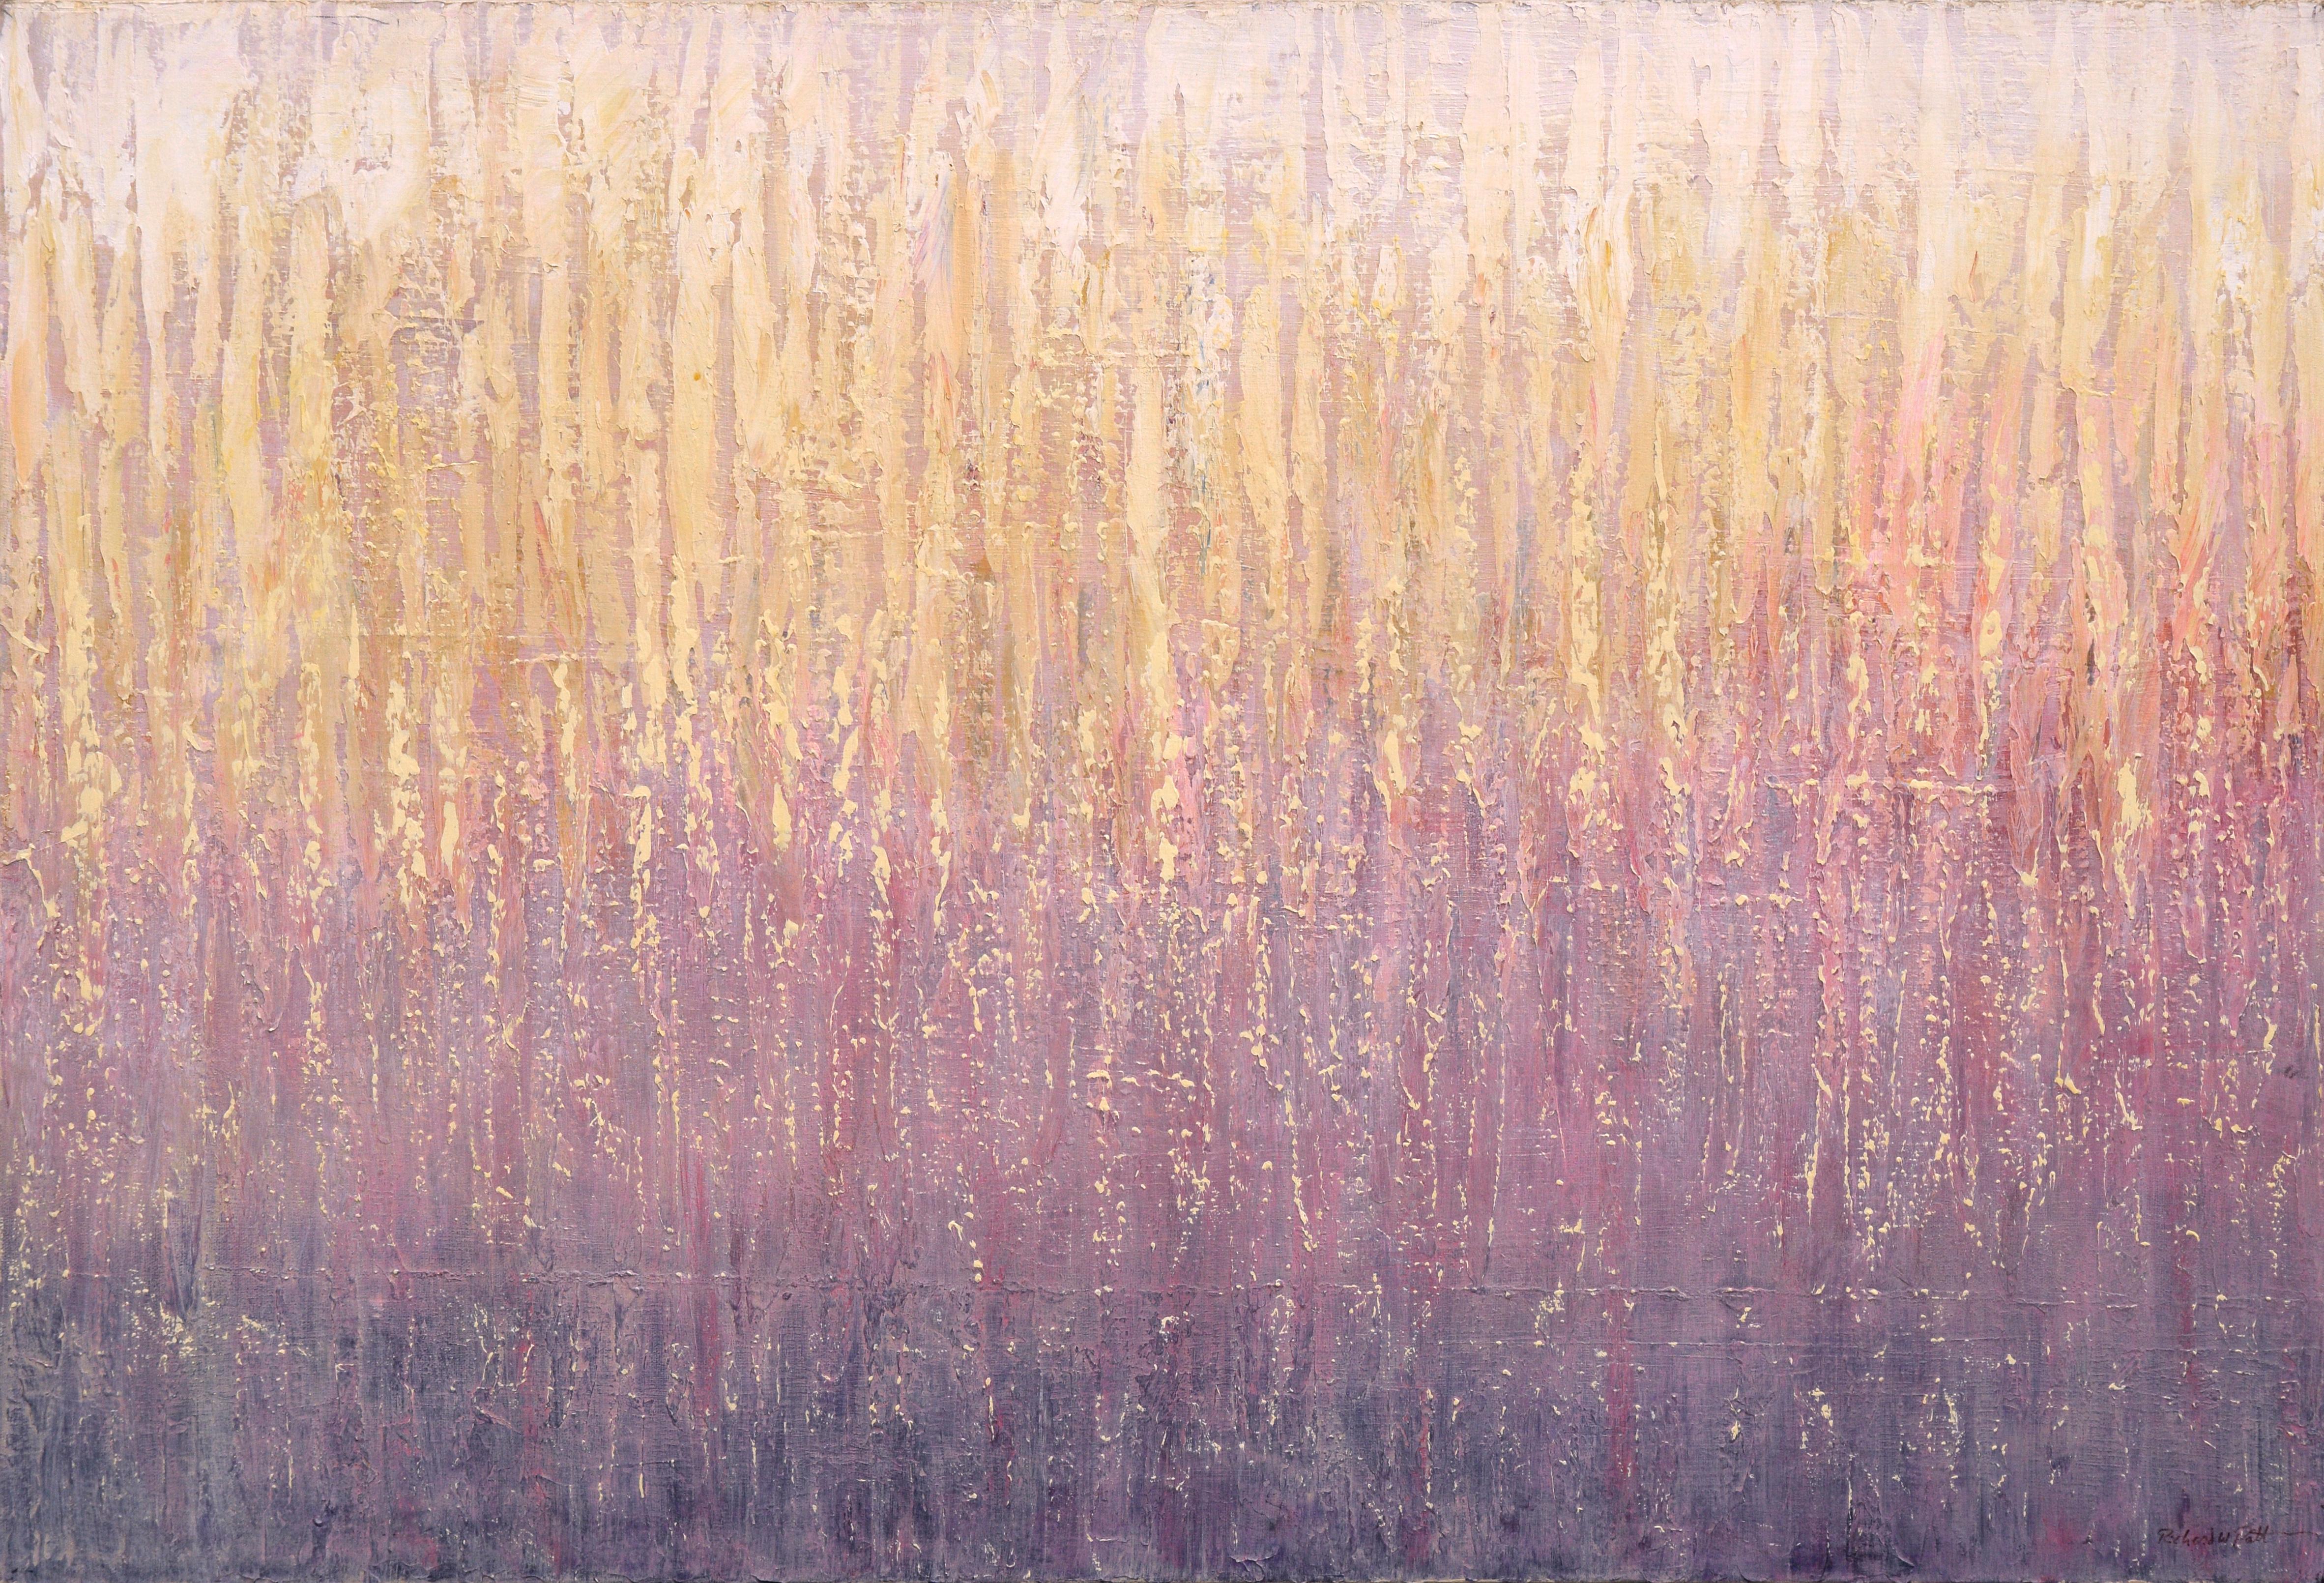 Richard W. Patt Landscape Painting - Abstract Field of Wheat